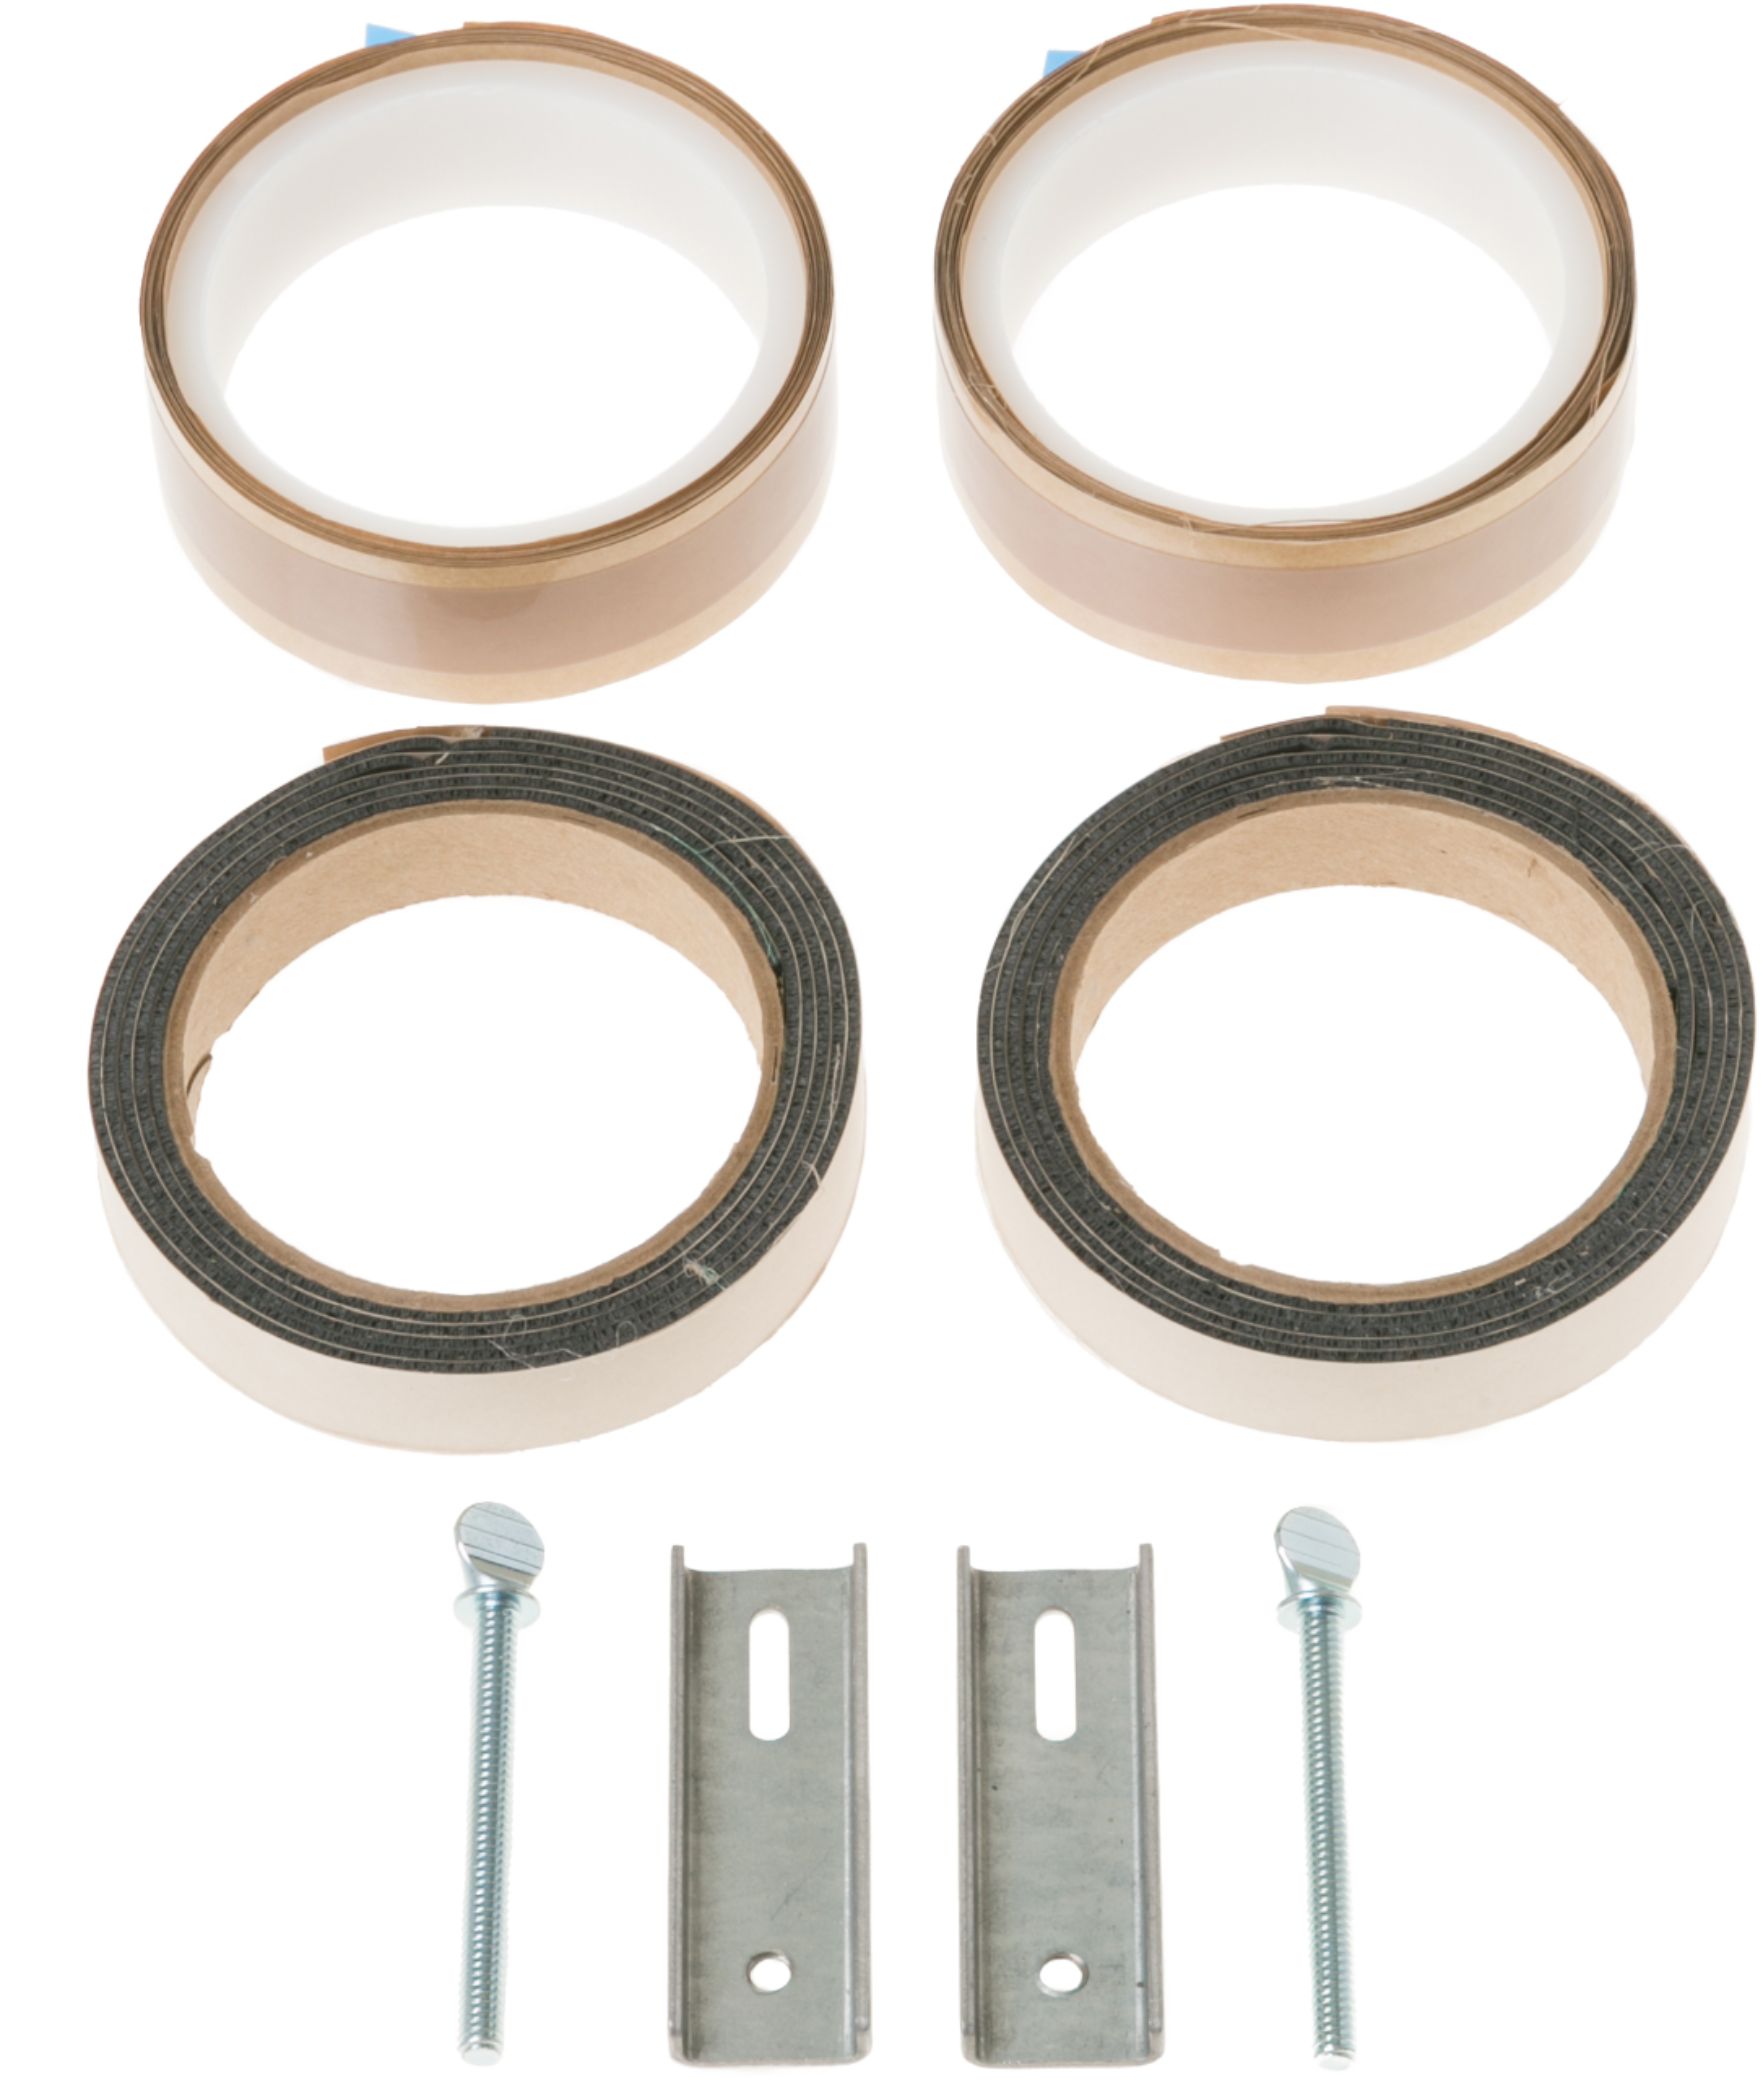 Angle View: Aluminum Mesh Filter for Bertazzoni Professional Series KU30 PRO 1 XV Hoods (4-Pack) - Stainless Steel